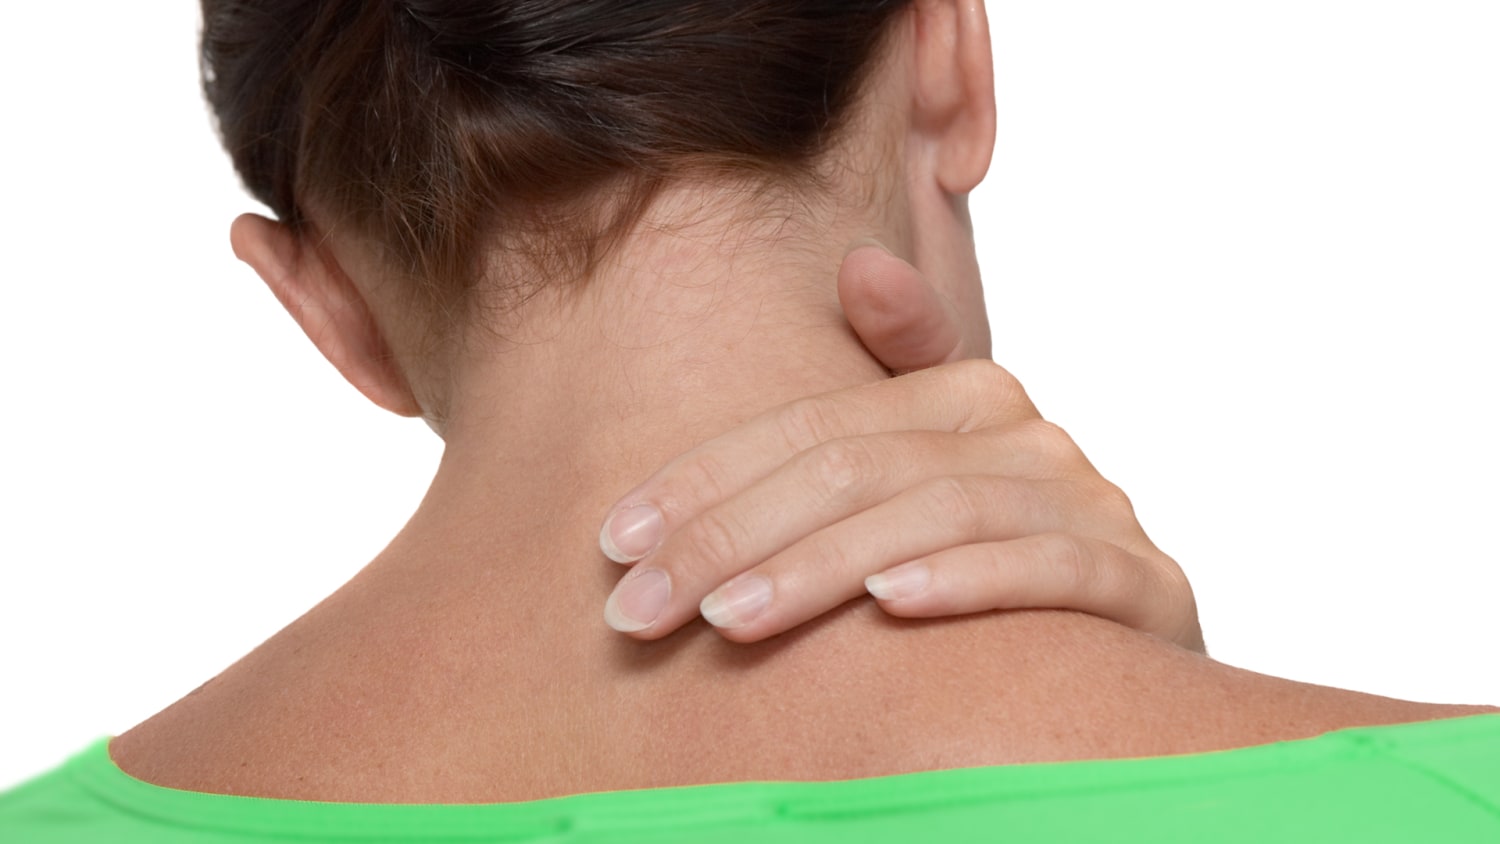 DIY massage: Give yourself a shoulder, rub